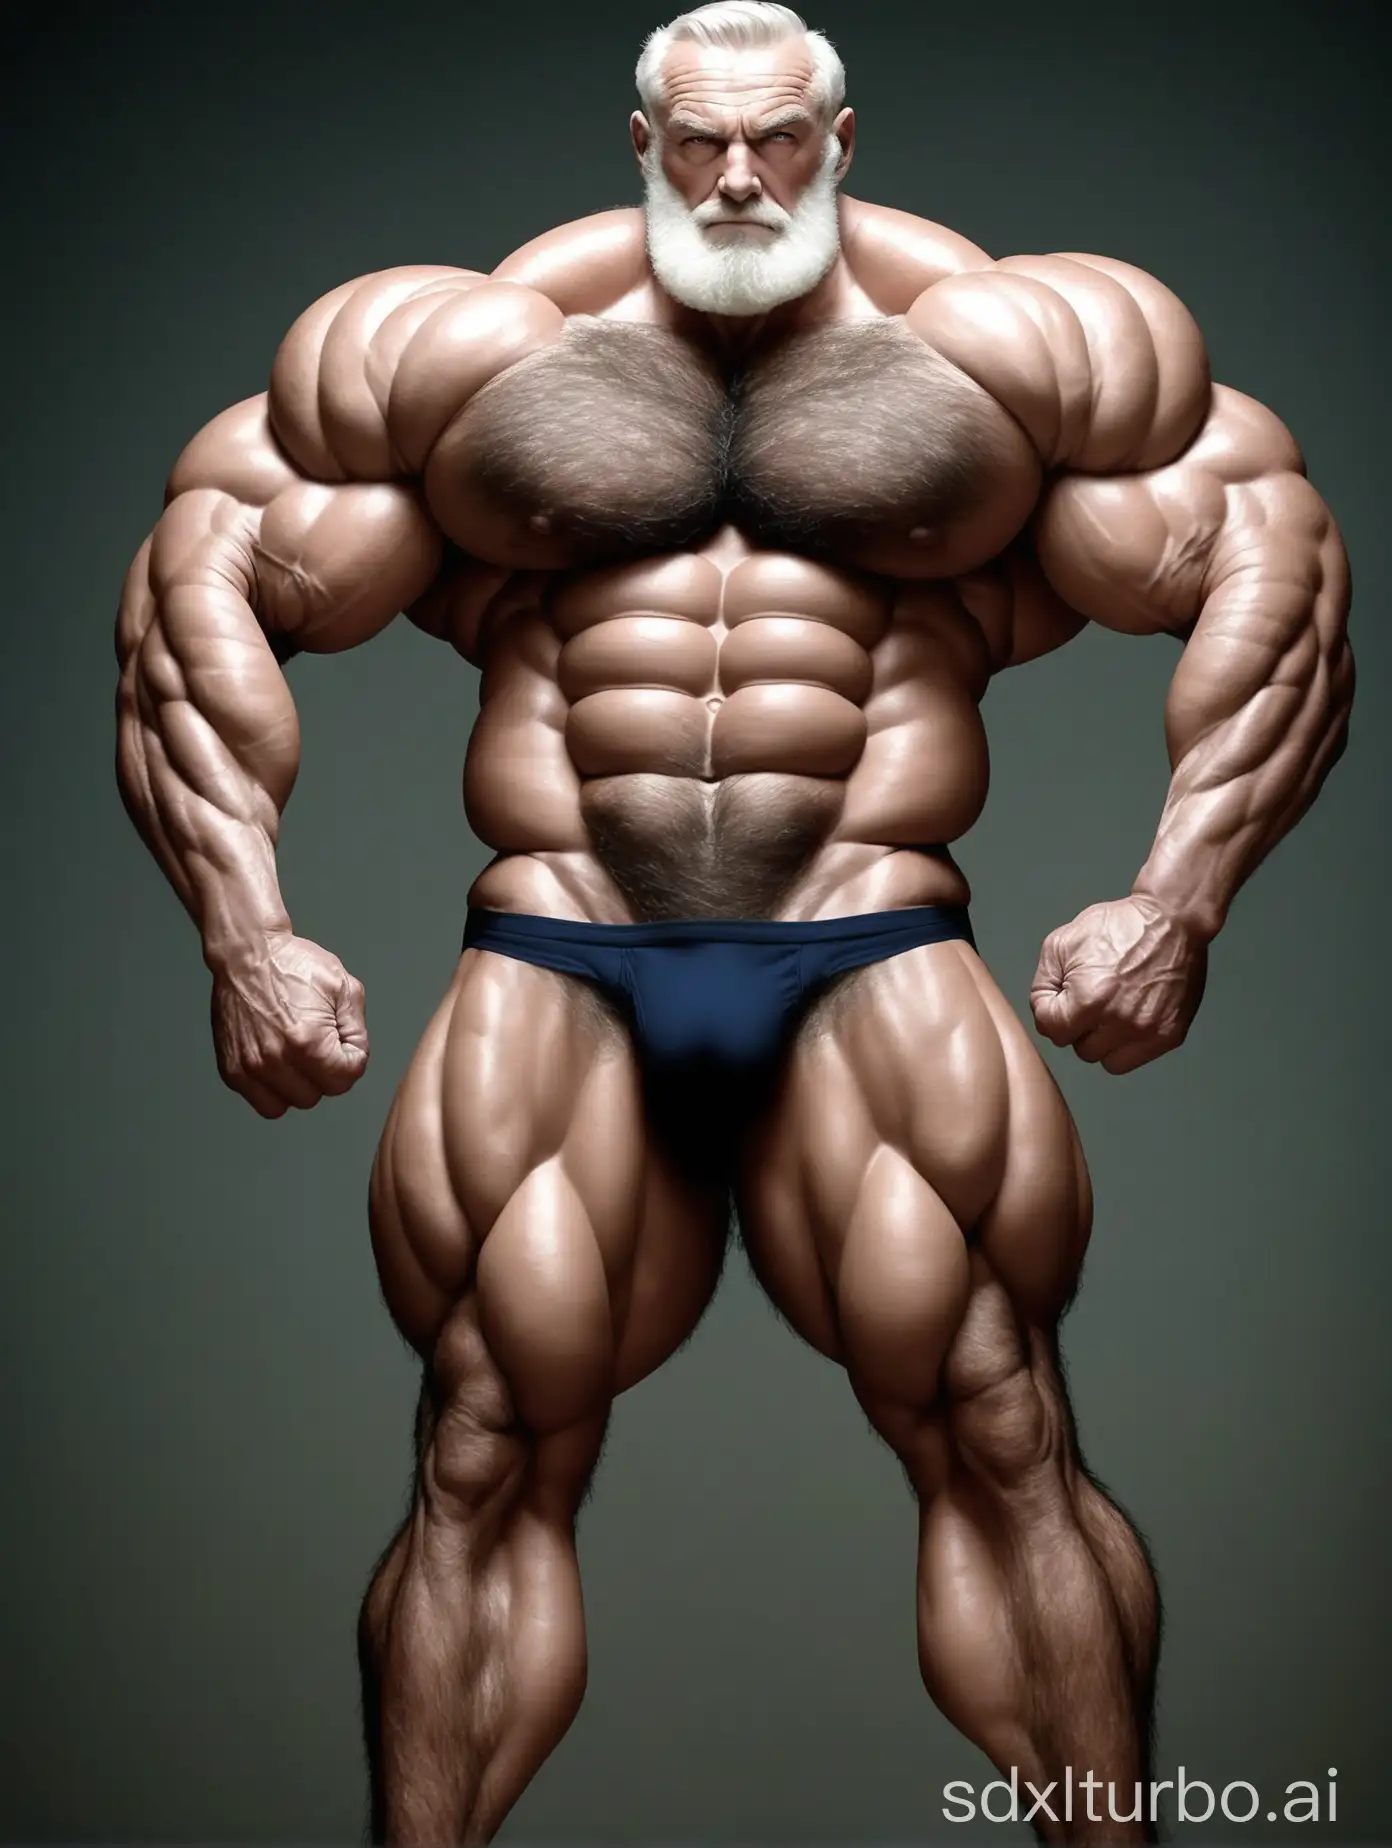 Massive-Muscle-Man-in-Underwear-Strong-and-Handsome-Bodybuilder-Portrait